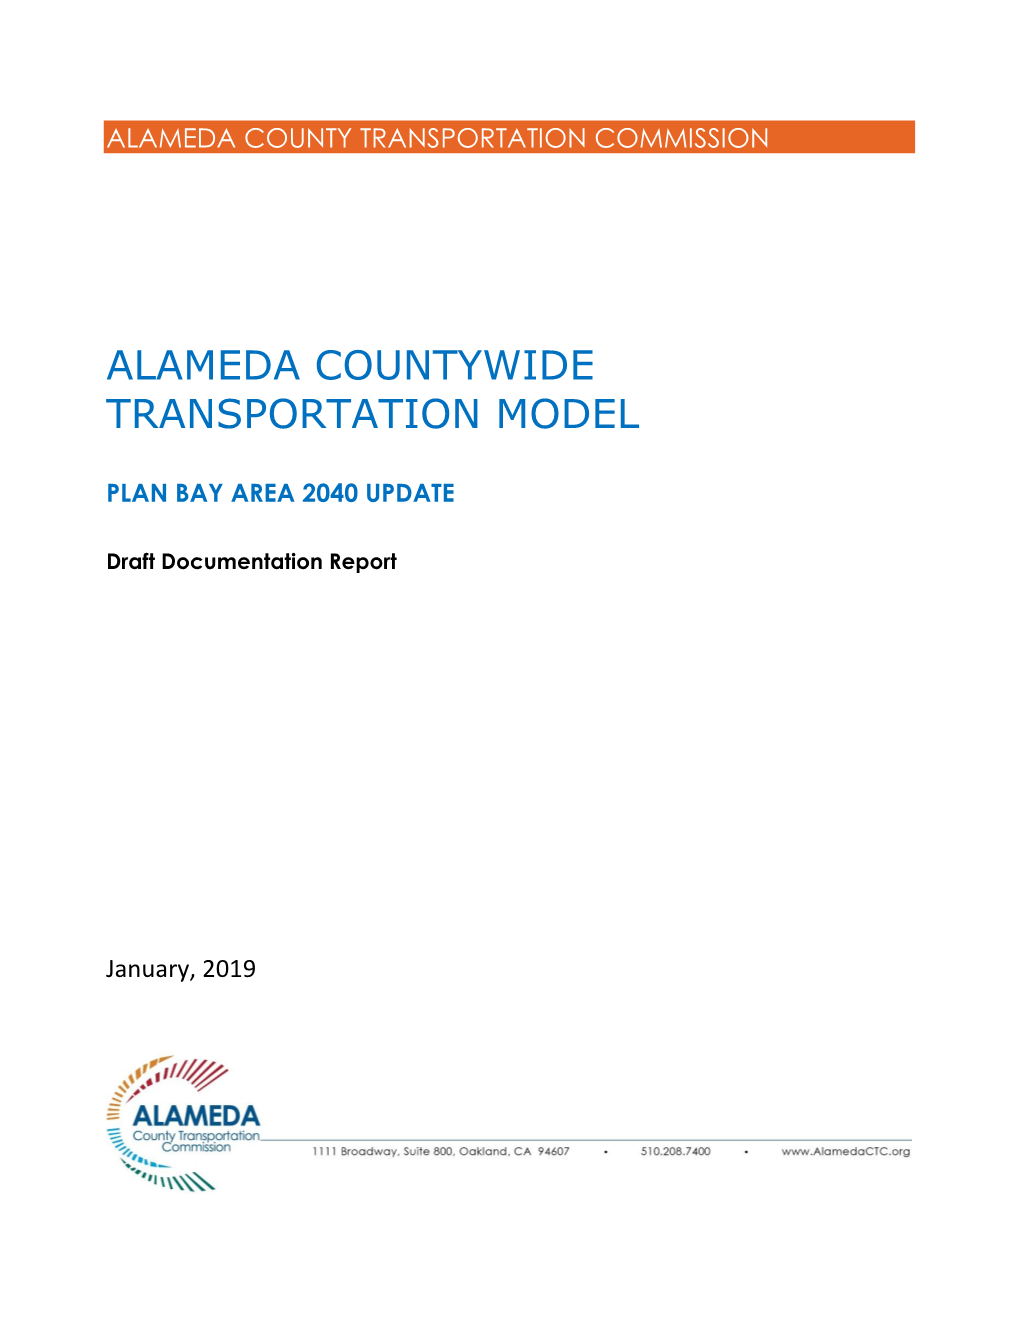 Alameda Countywide Transportation Model